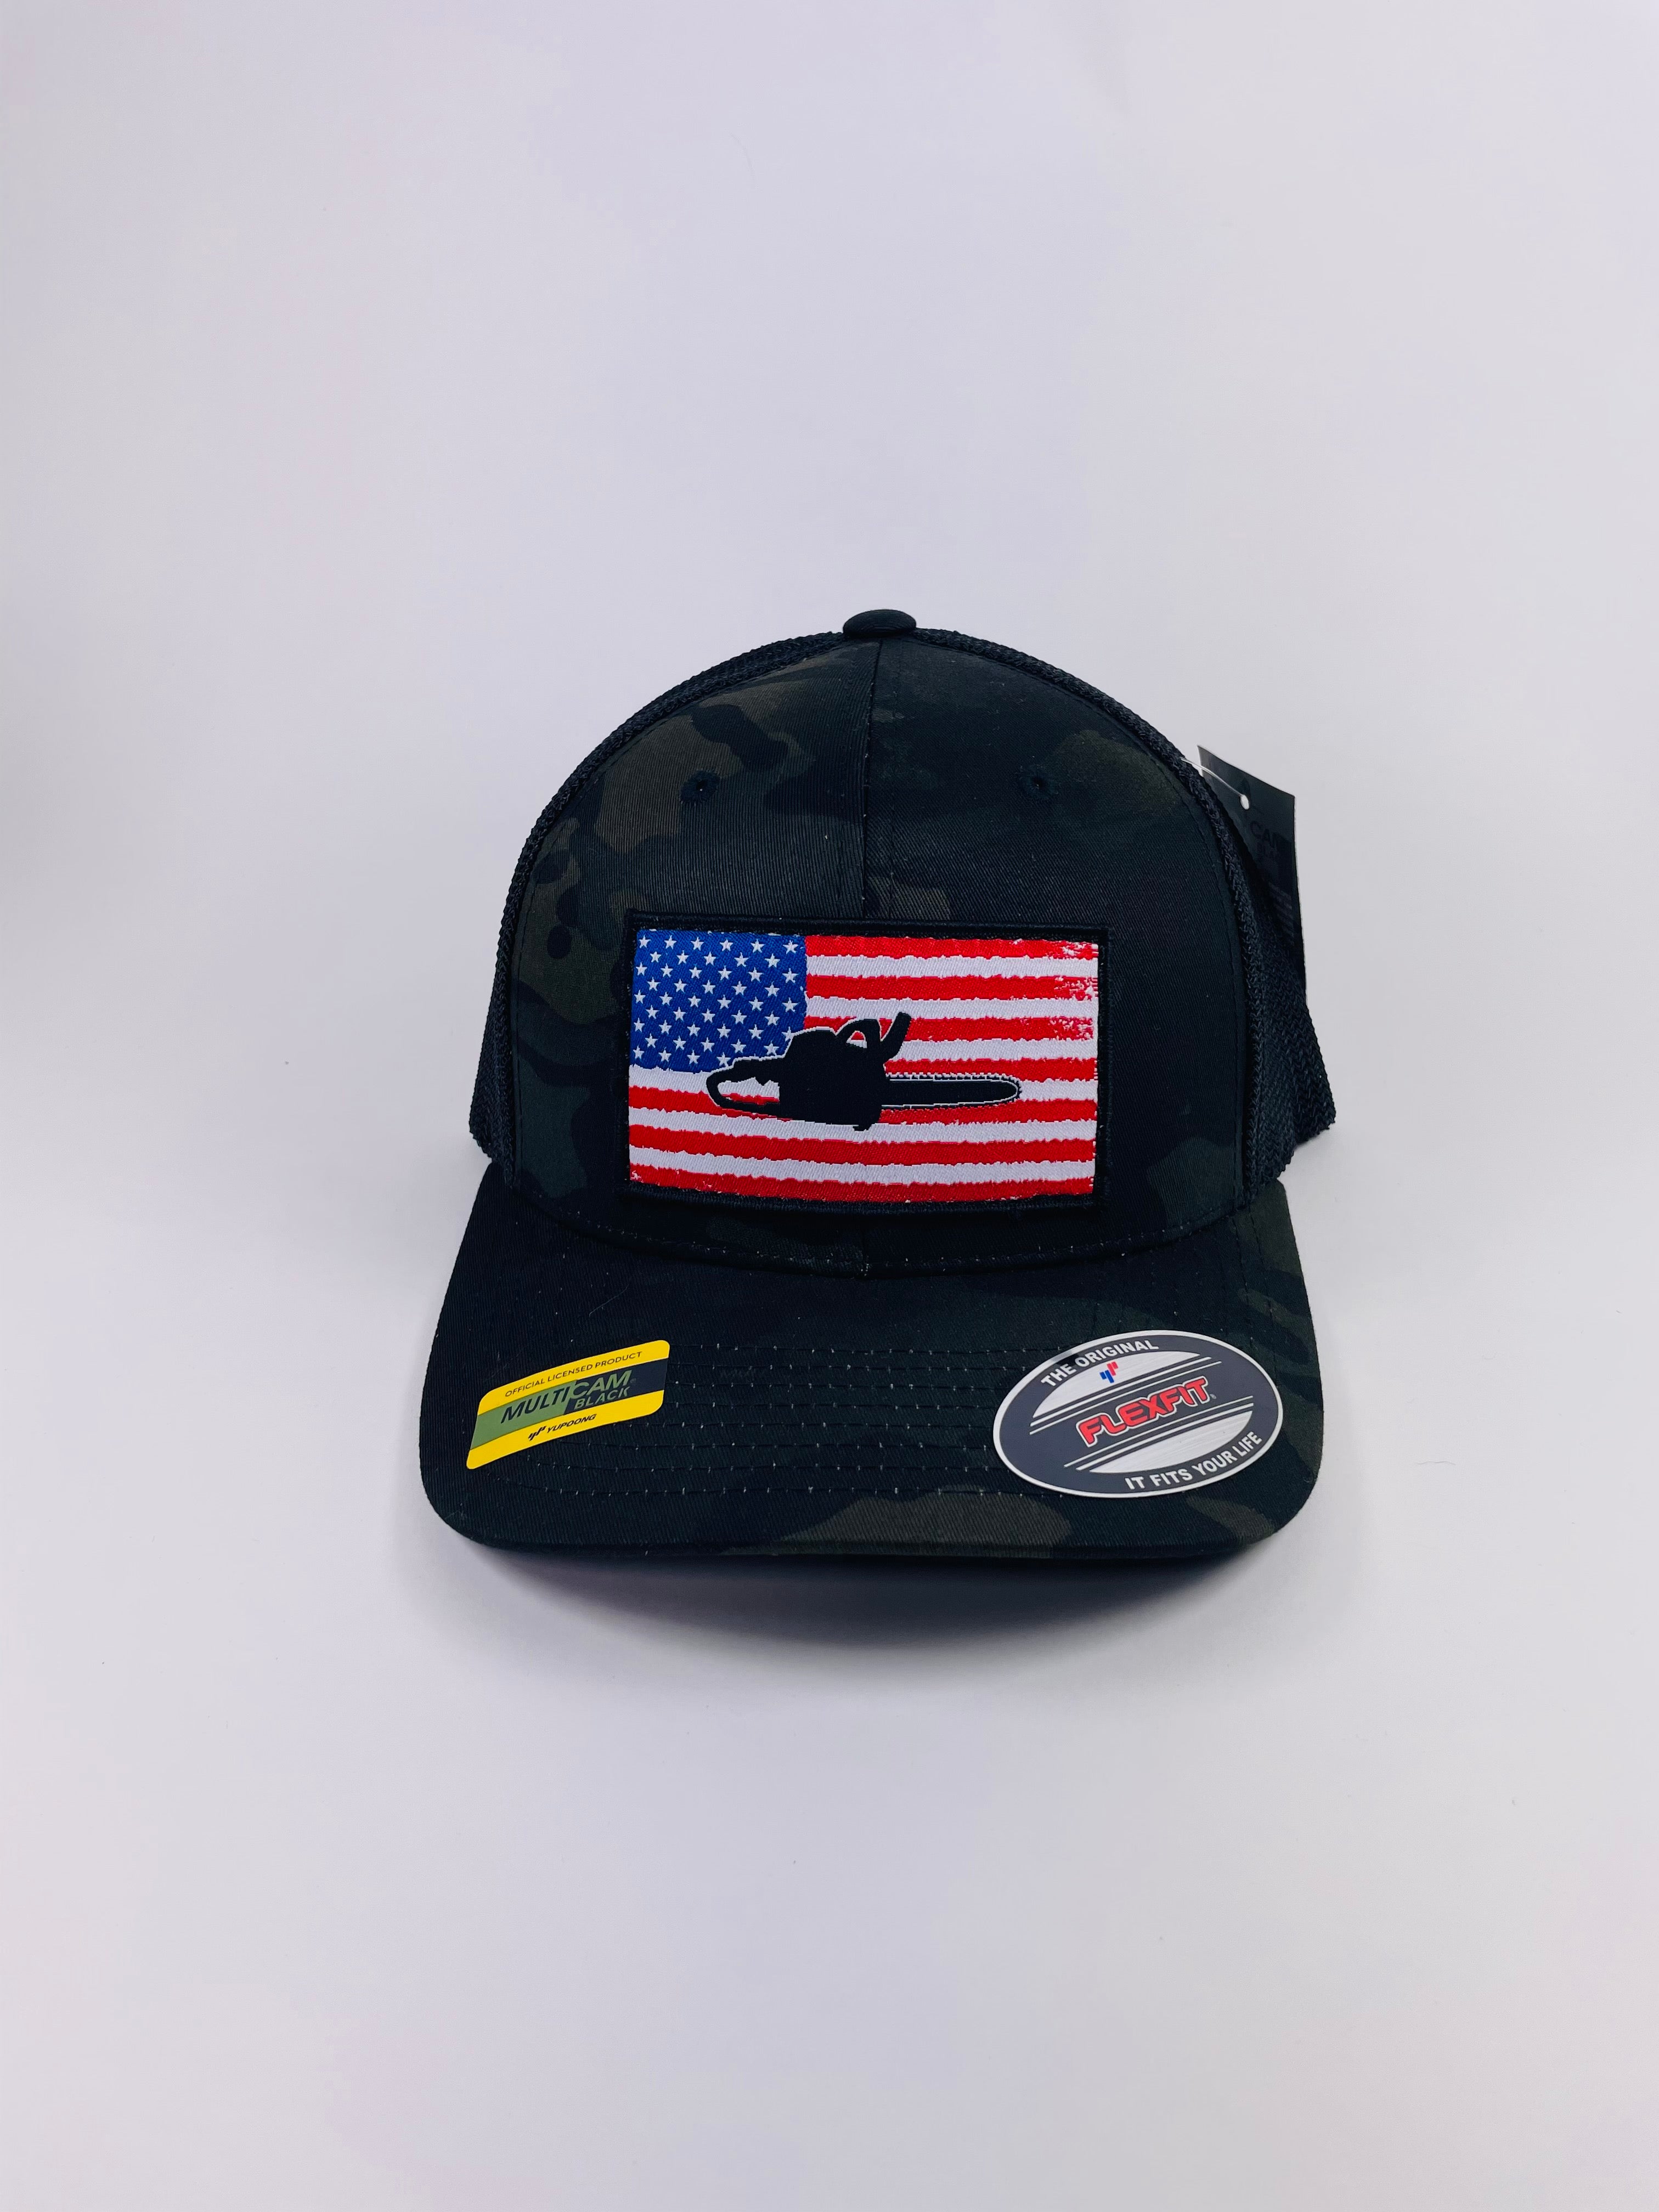 SAWYER AMERICAN HAT - MULTI CAM-BLACK /CURVED BILL